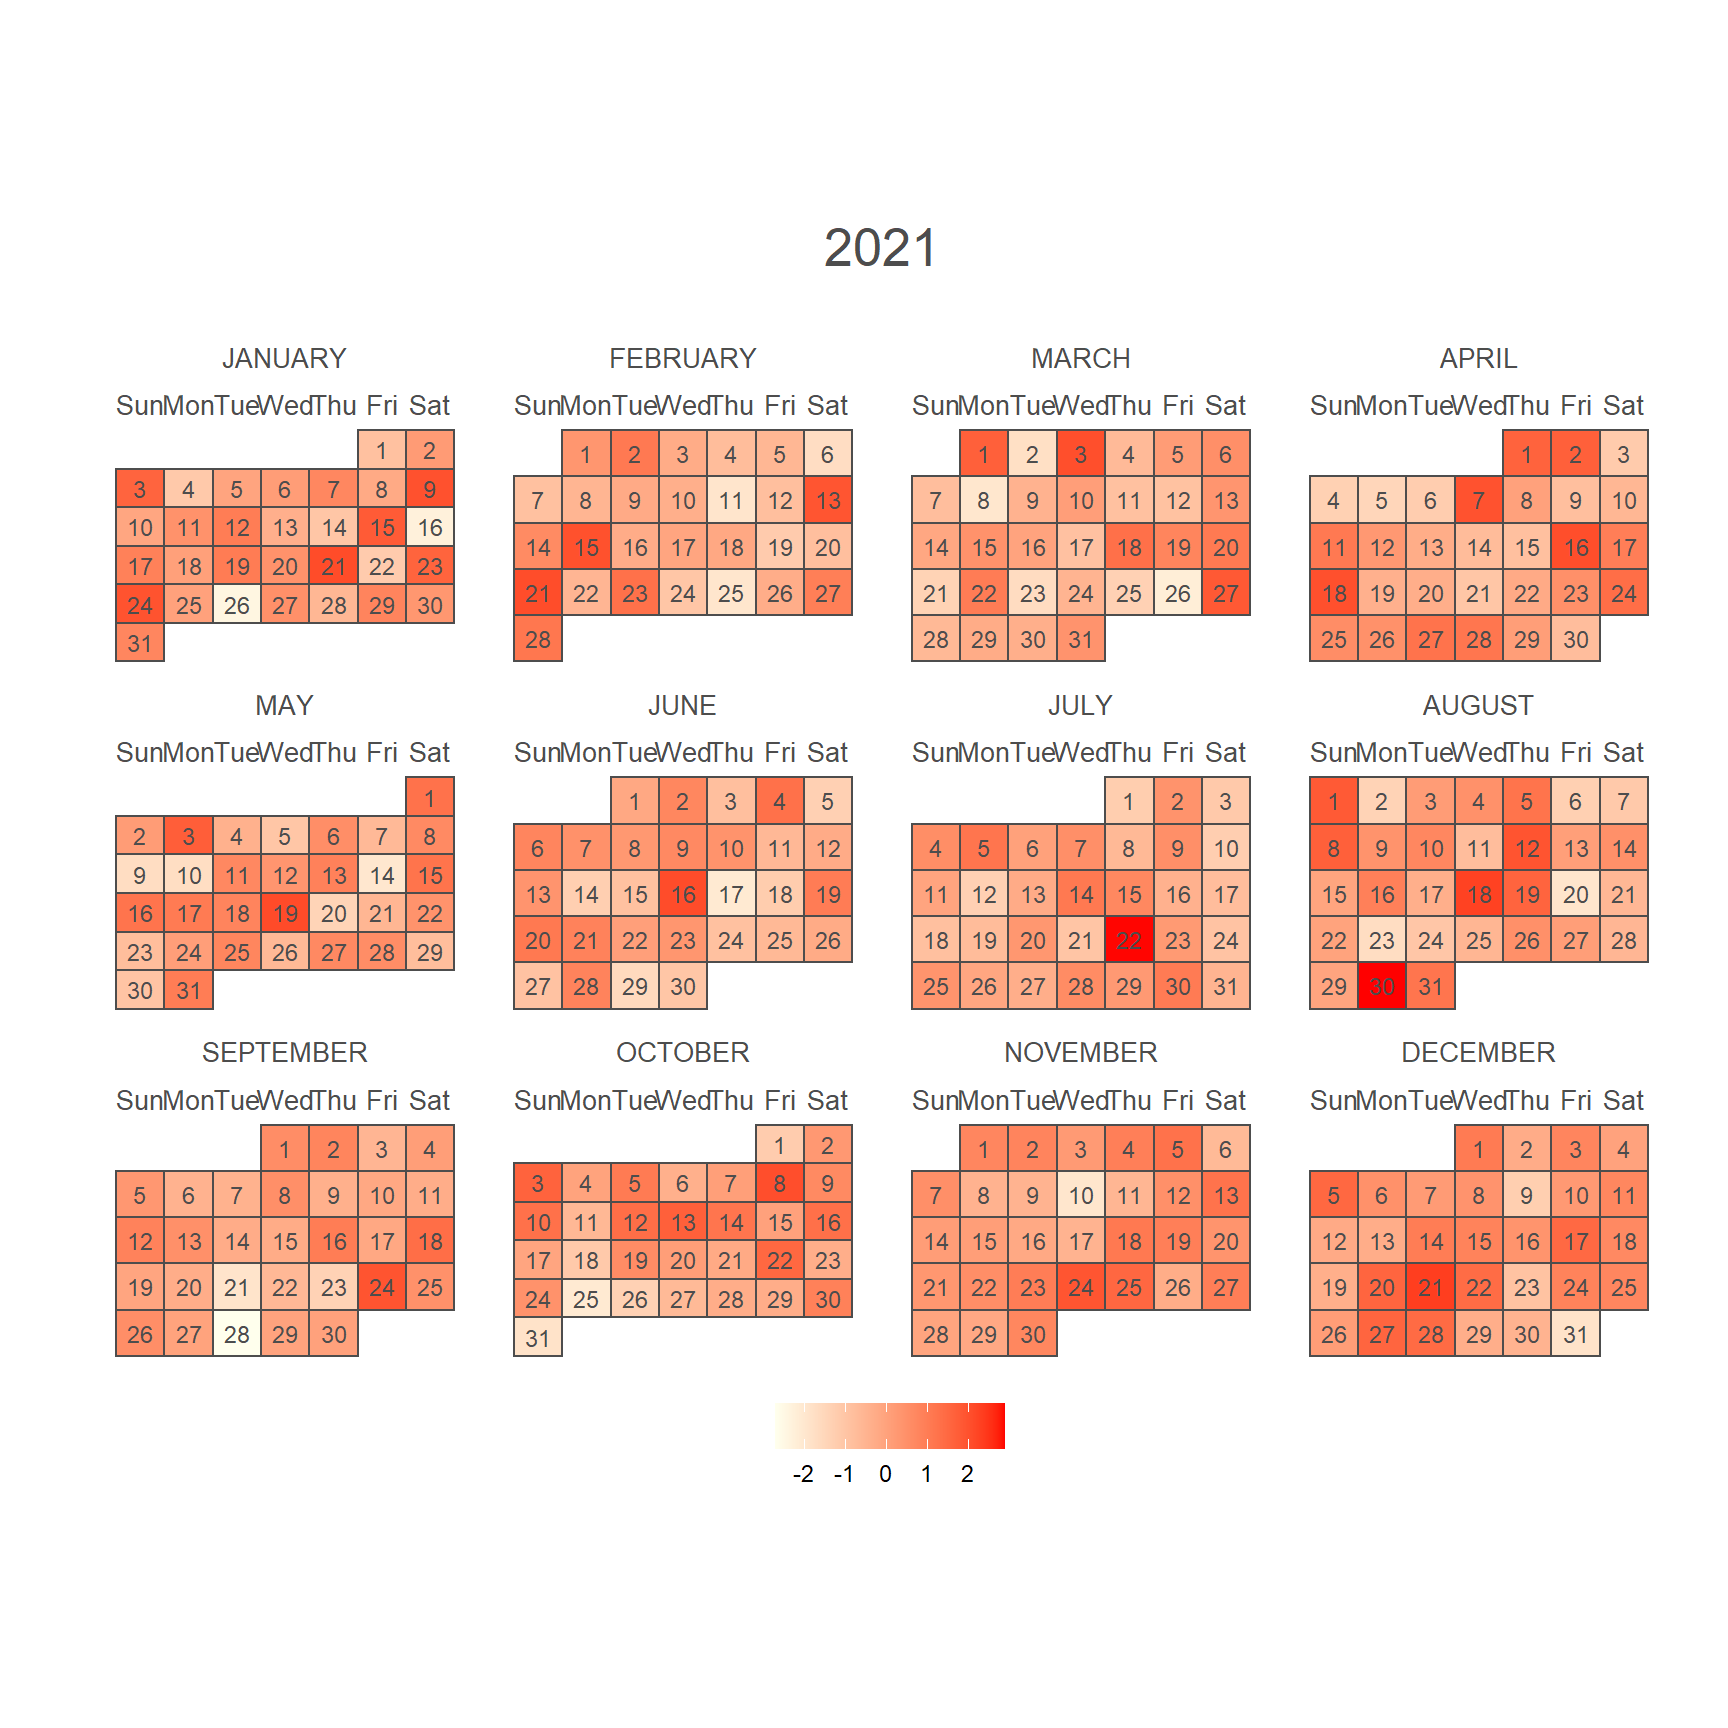 Yearly calendar heat map in R